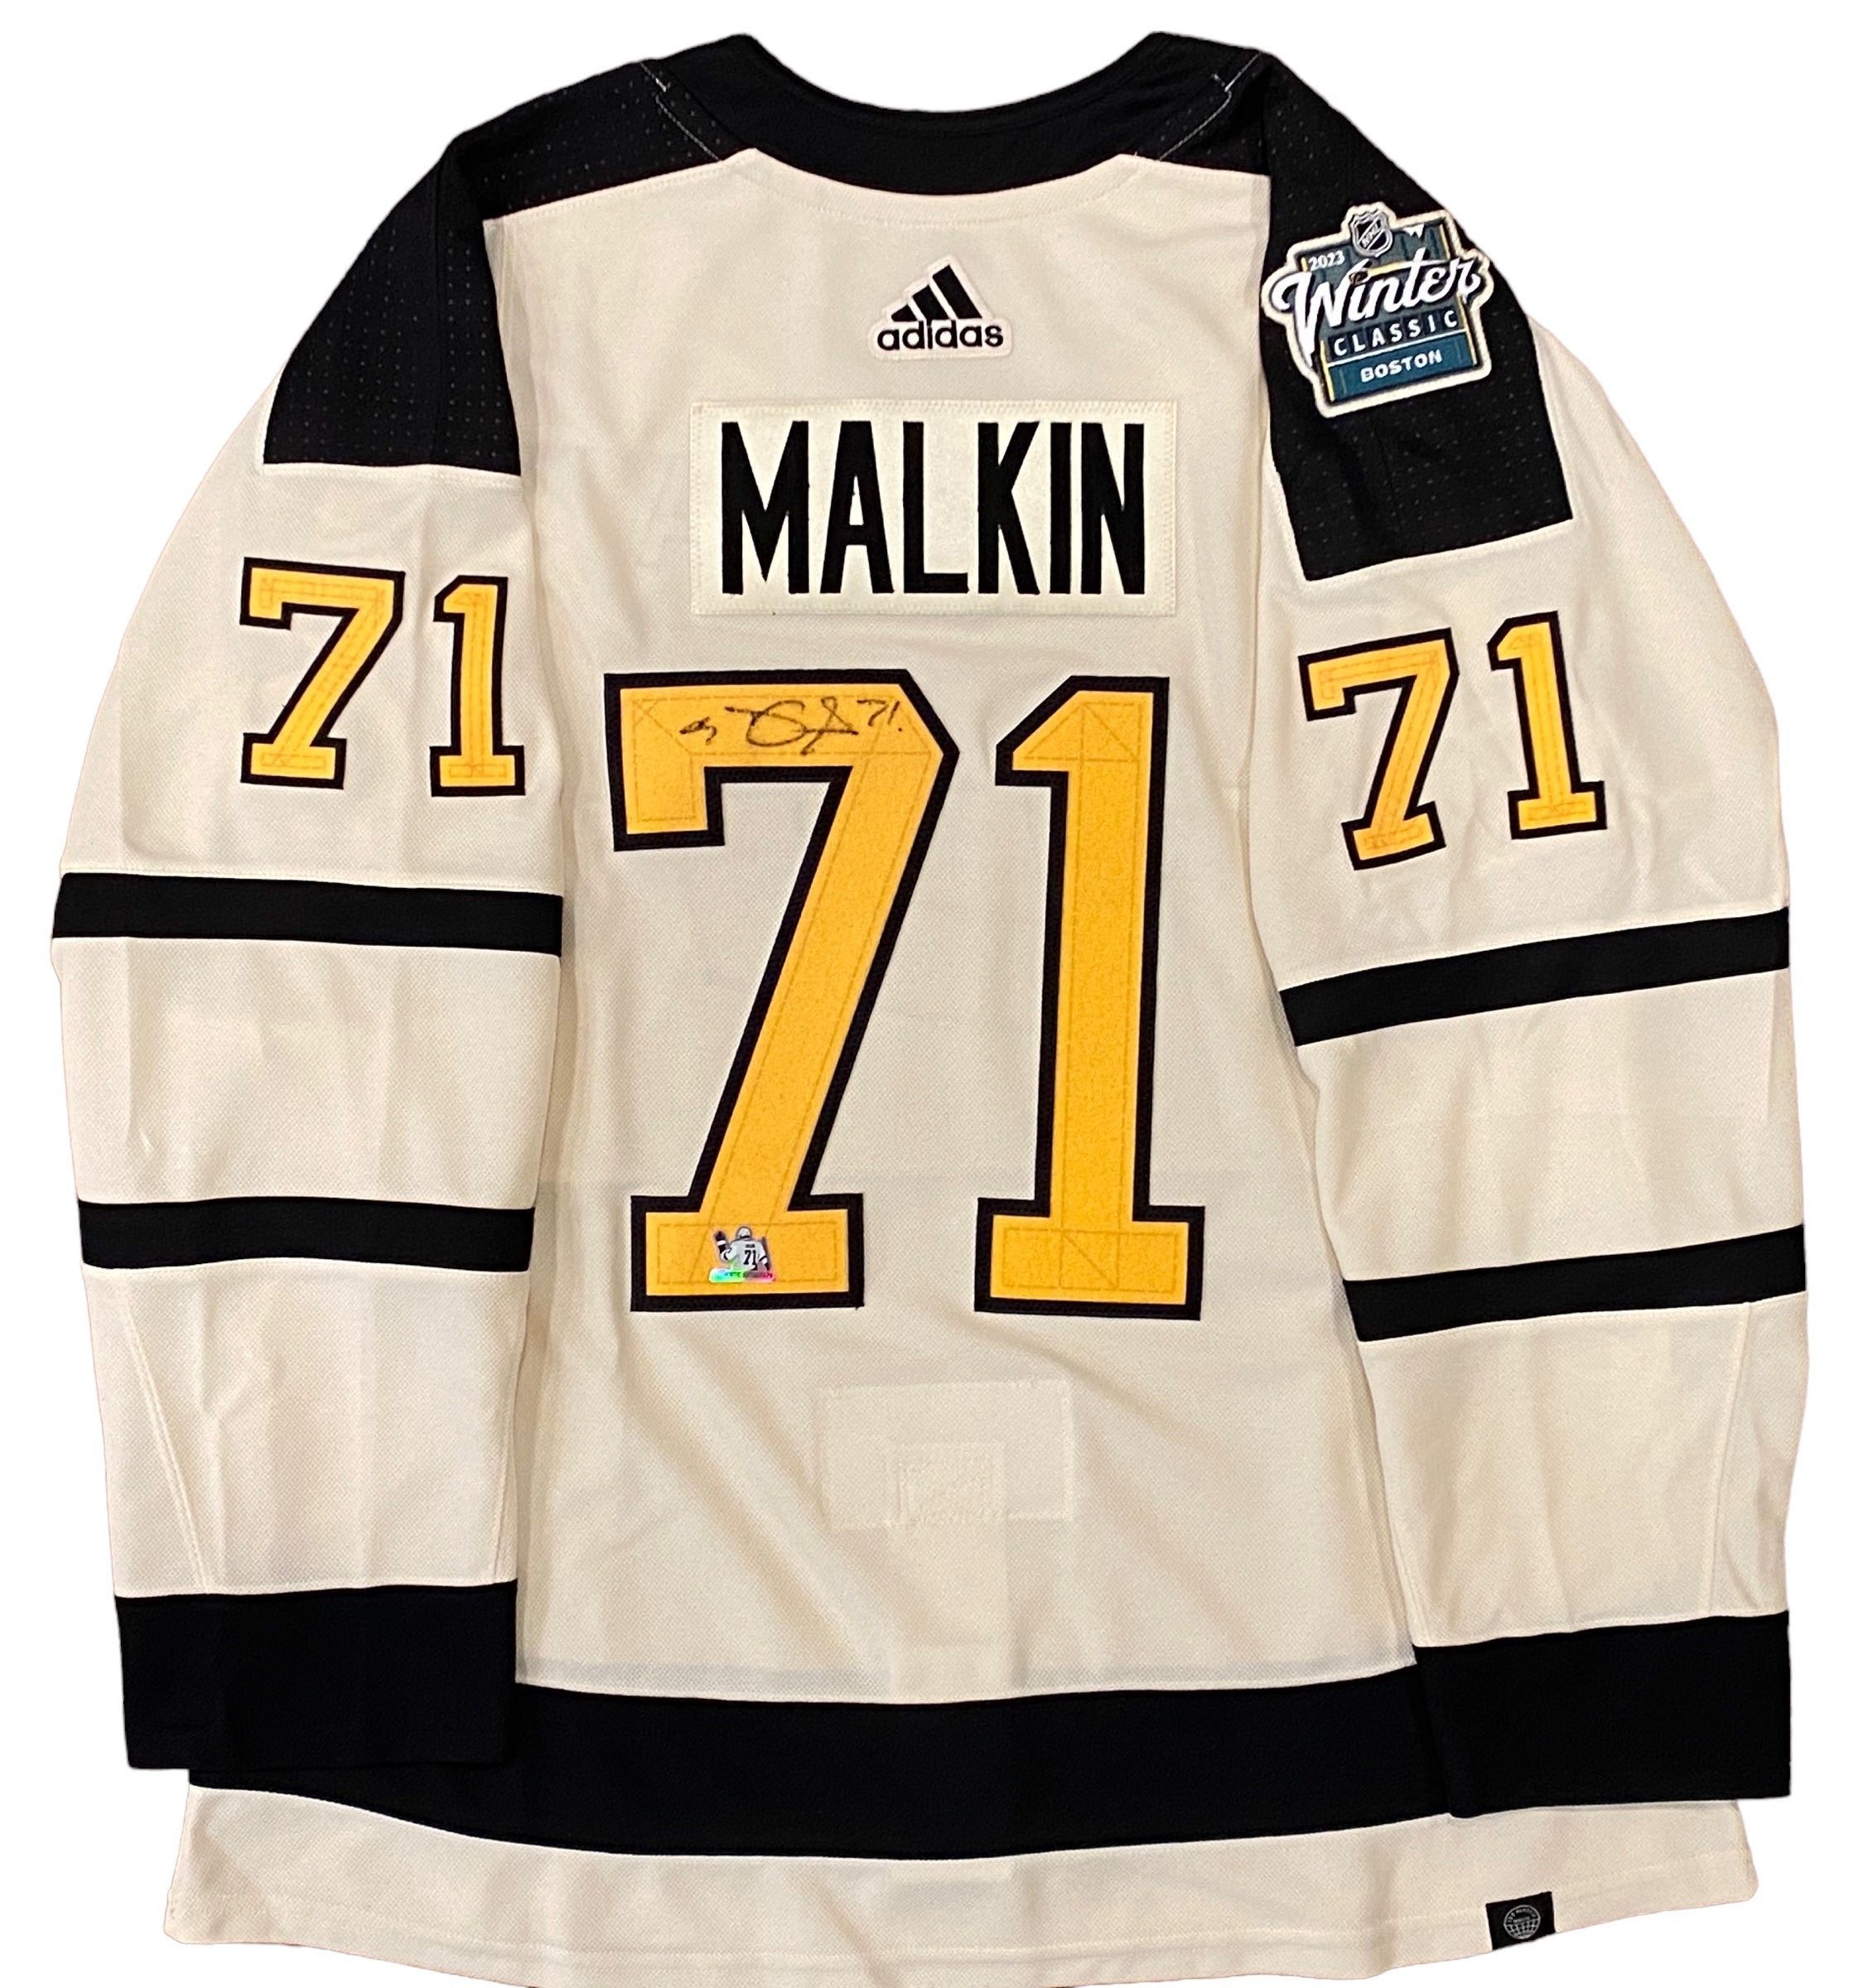 Evgeni Malkin Signed 2019 Penguins Stadium Series Jersey (JSA COA)